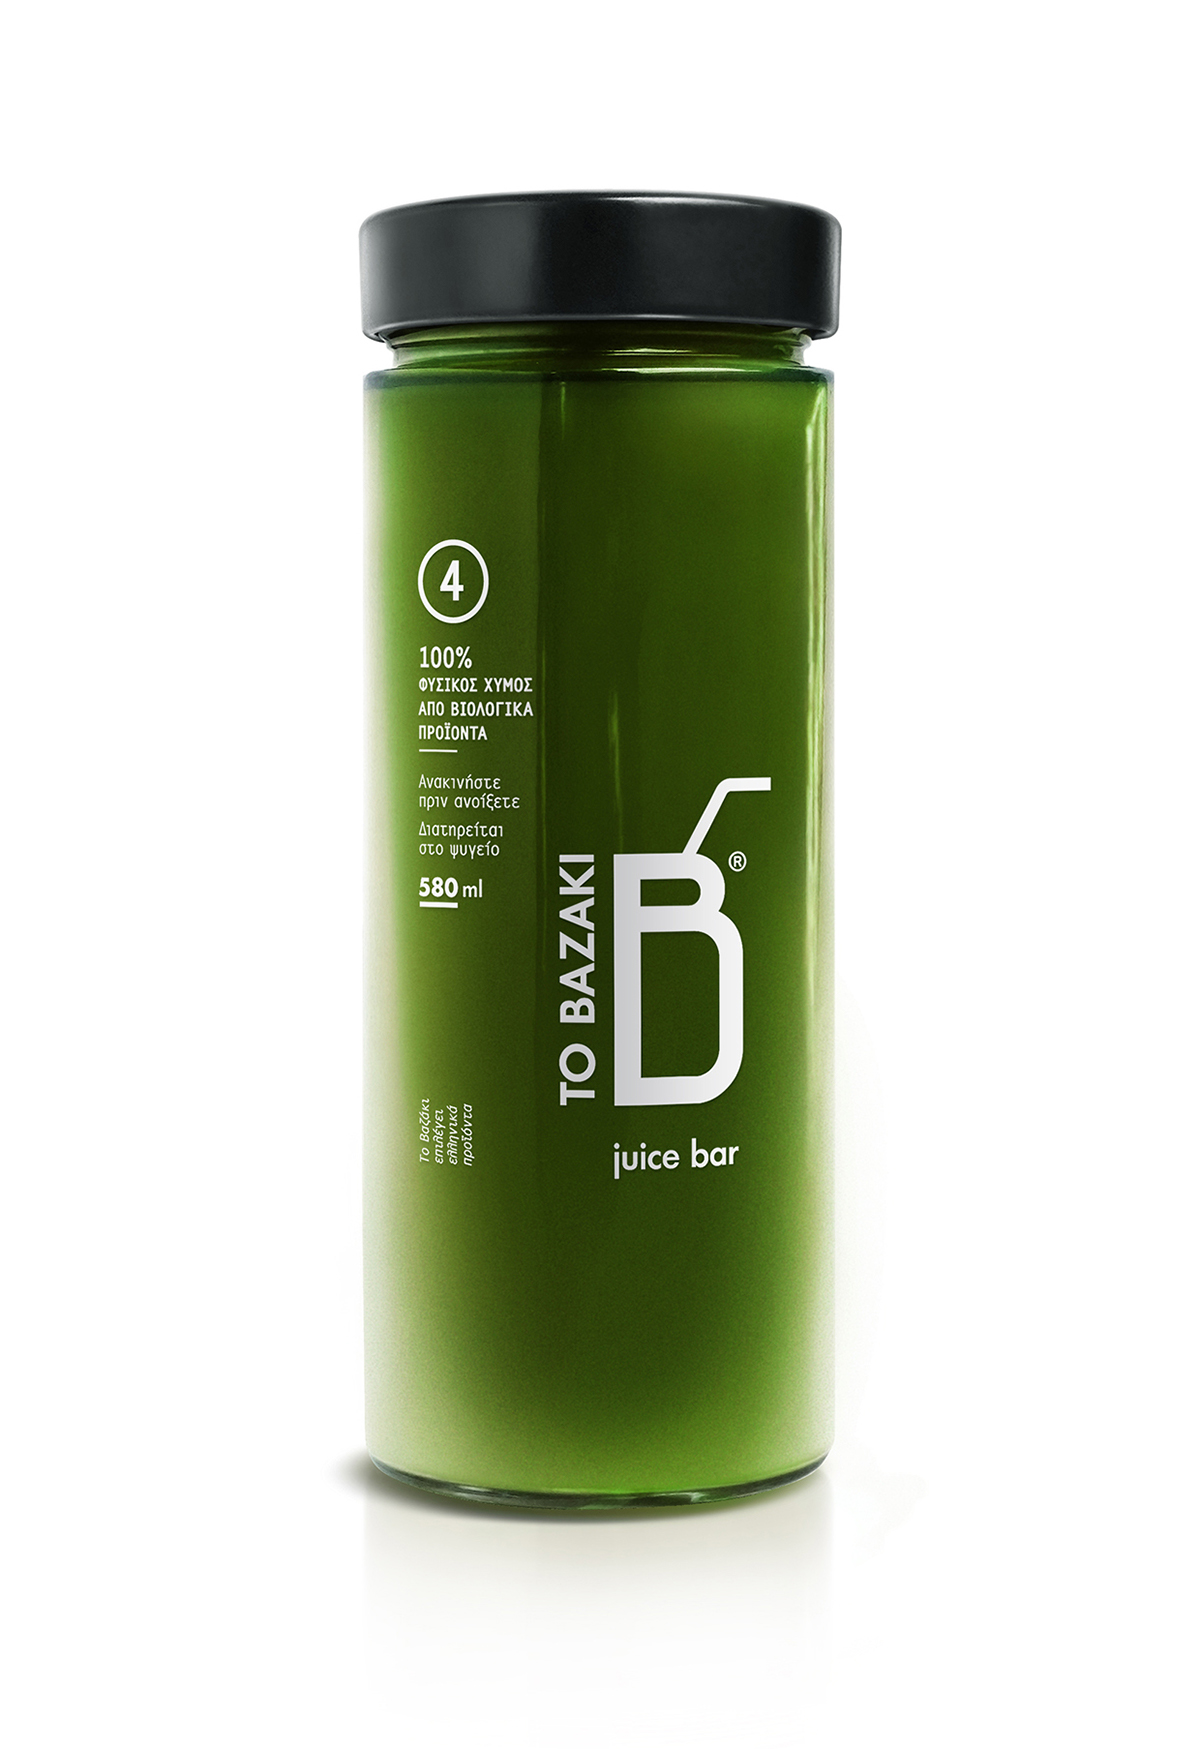 juice detox juice bar Fruit green logo graphic design greece jar Greece Greek design